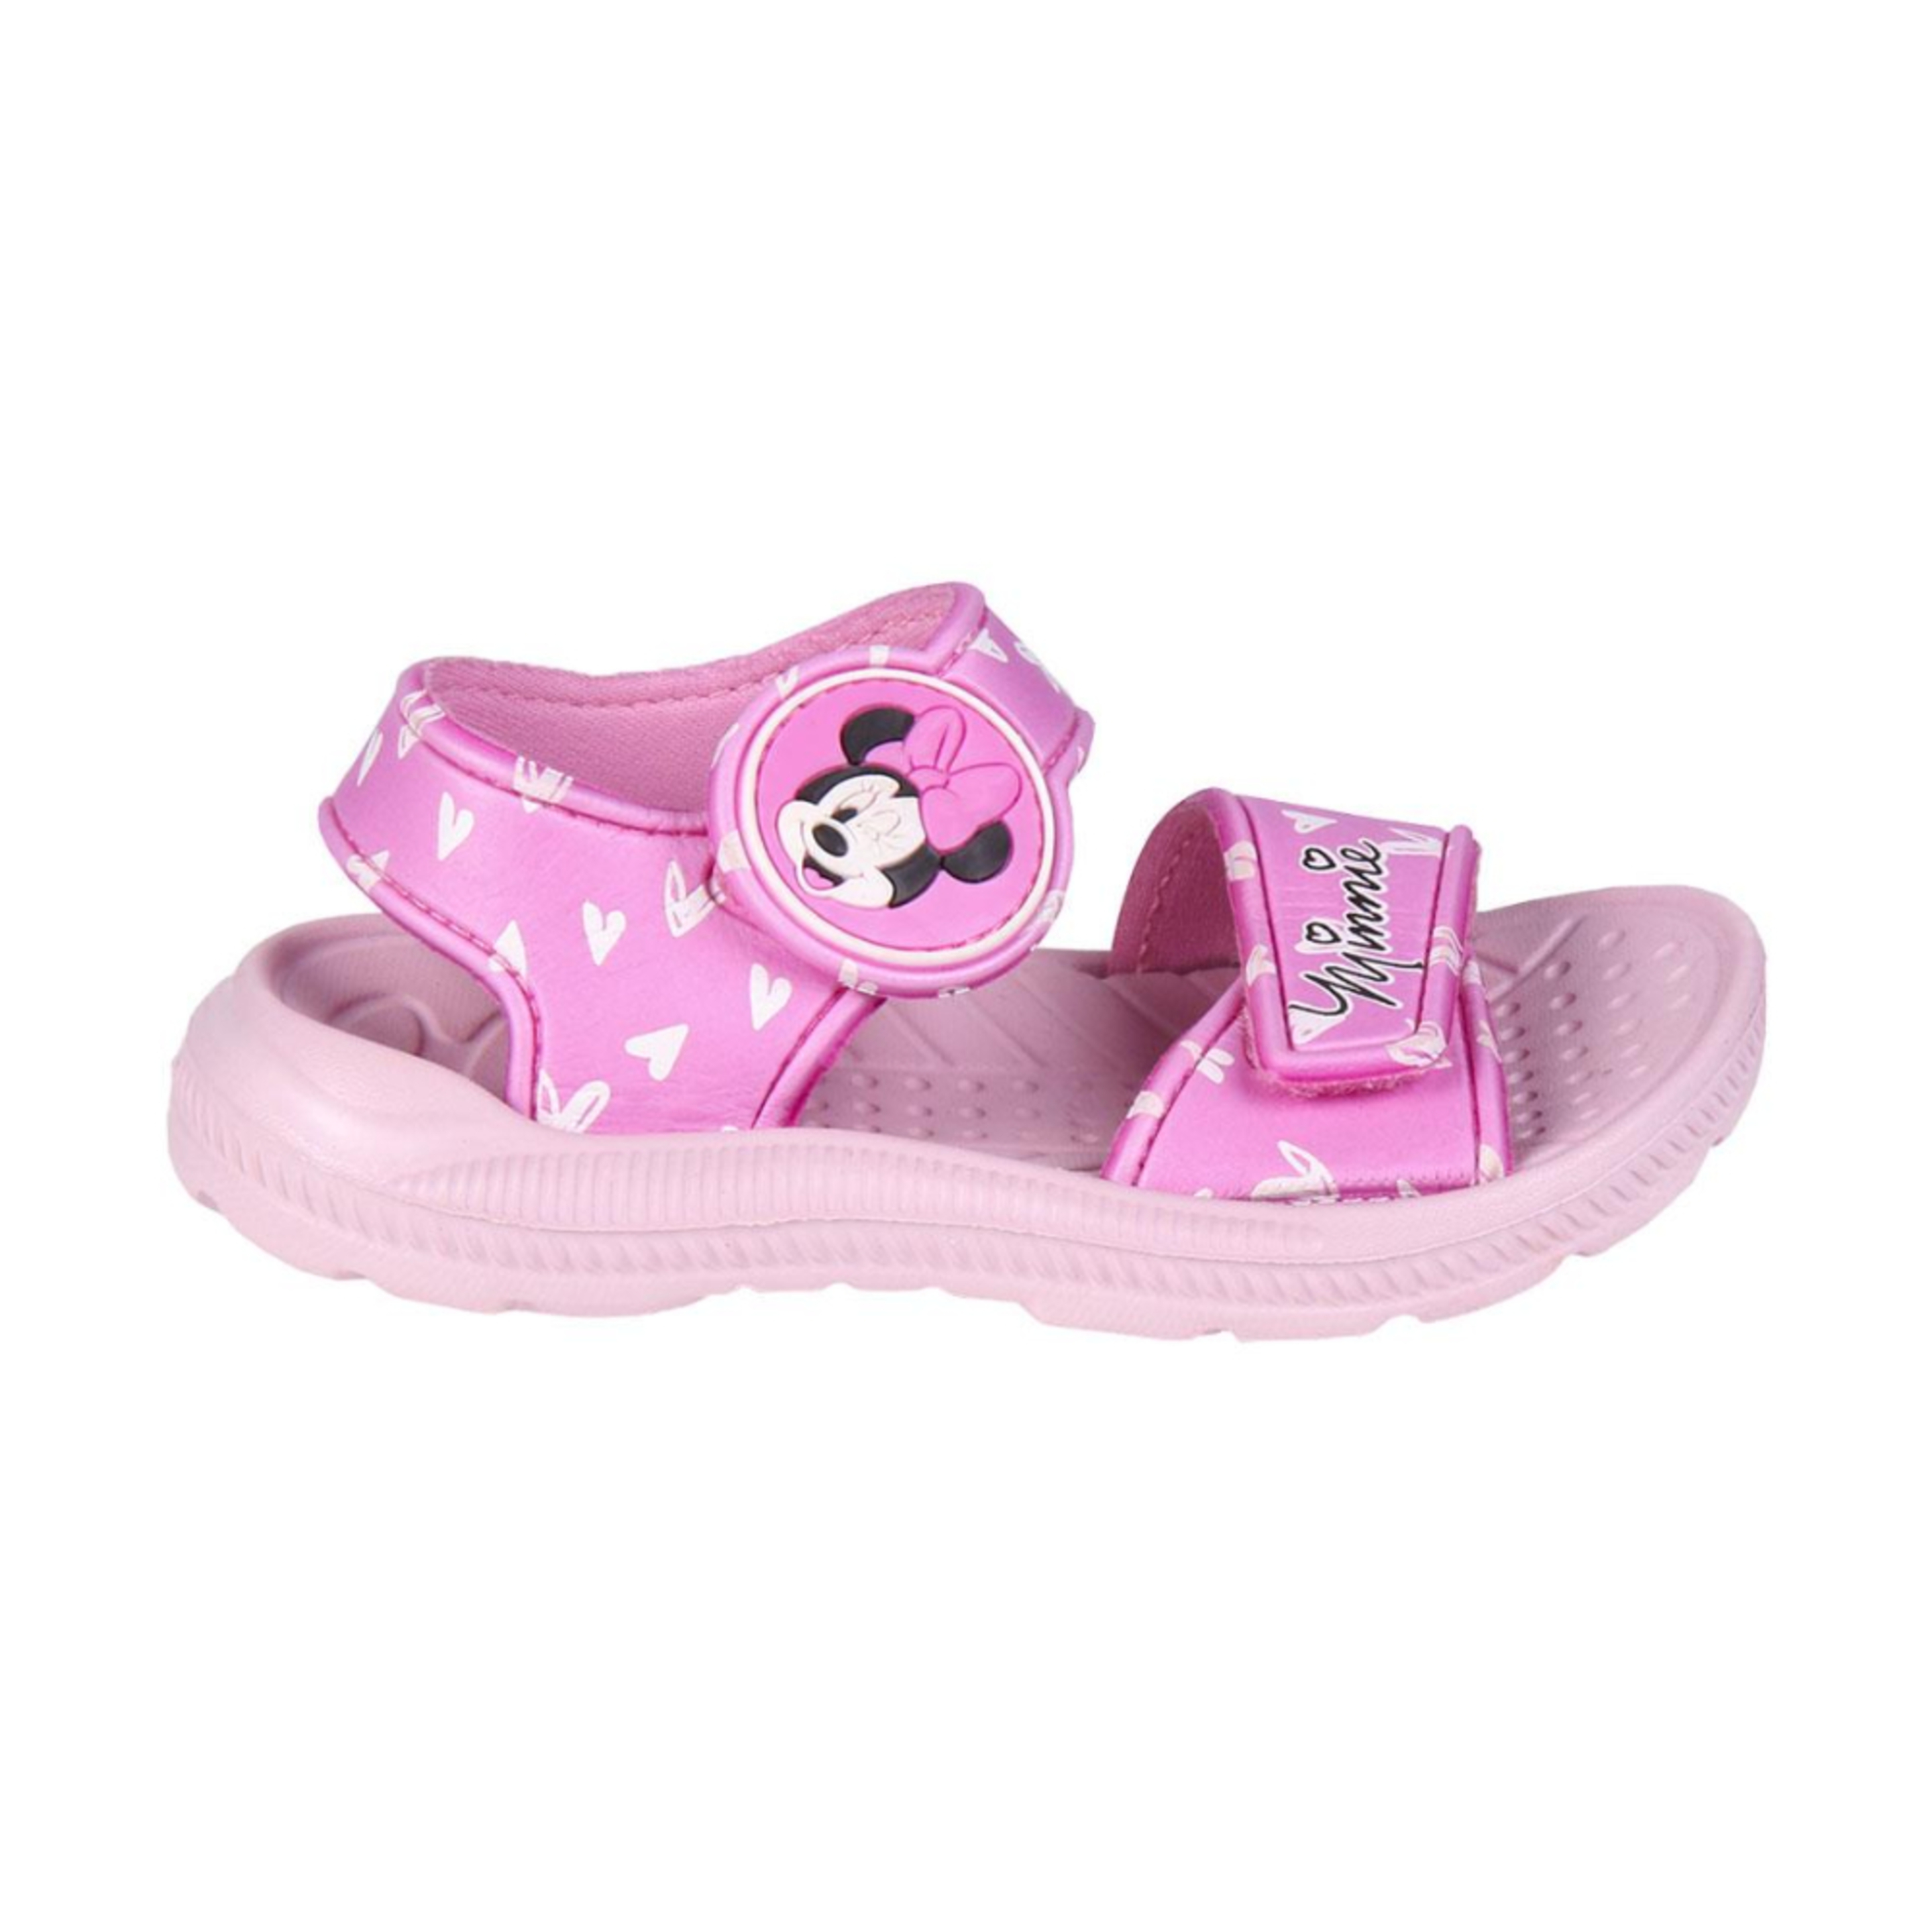 Minnie Mouse Sandals 71485